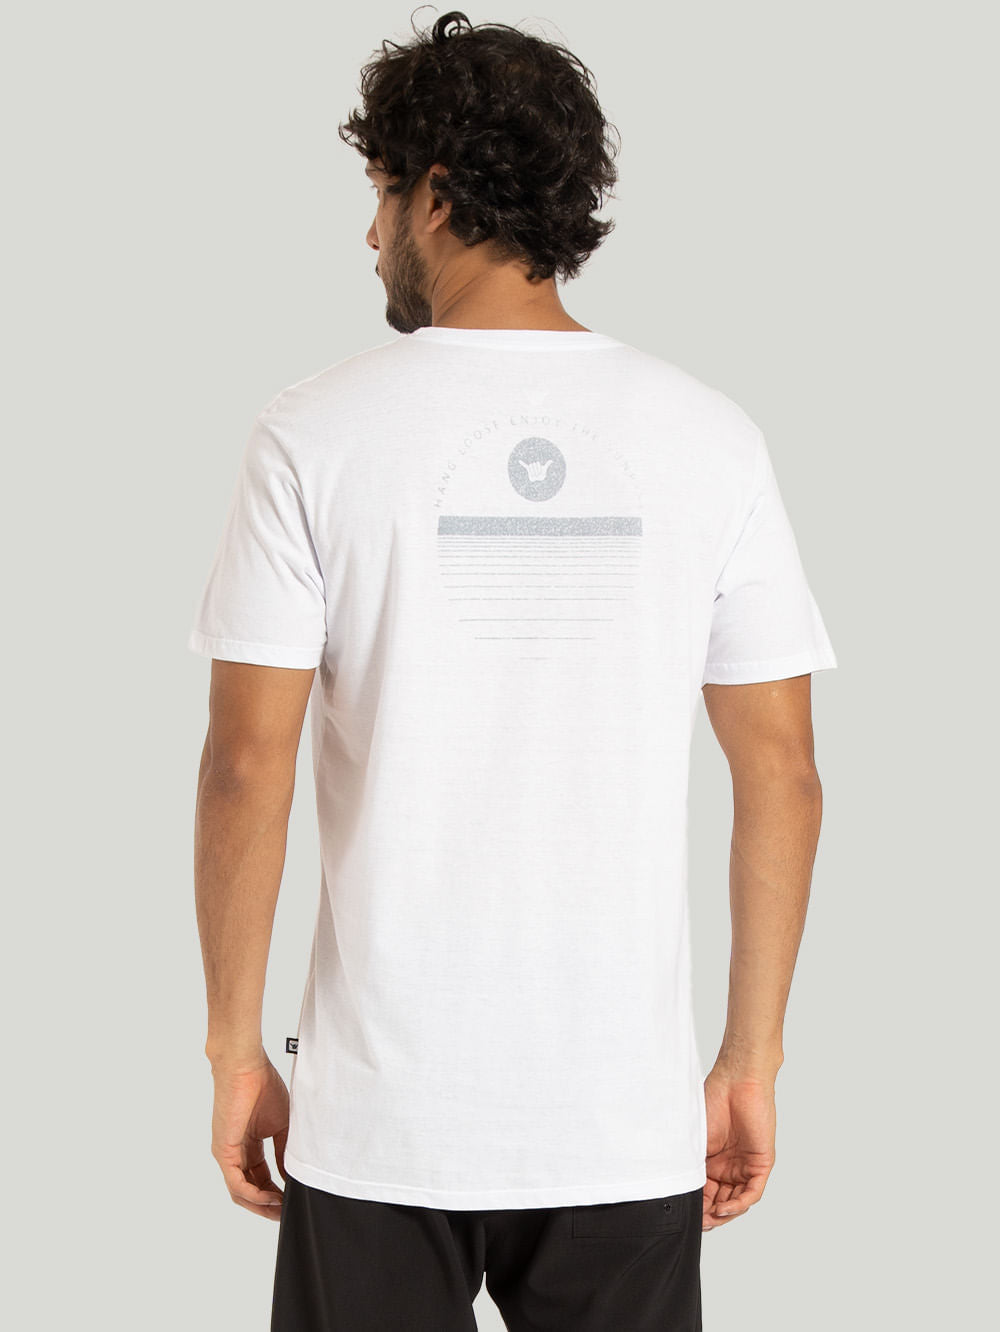 Camiseta Hang Loose Sunrise Branca